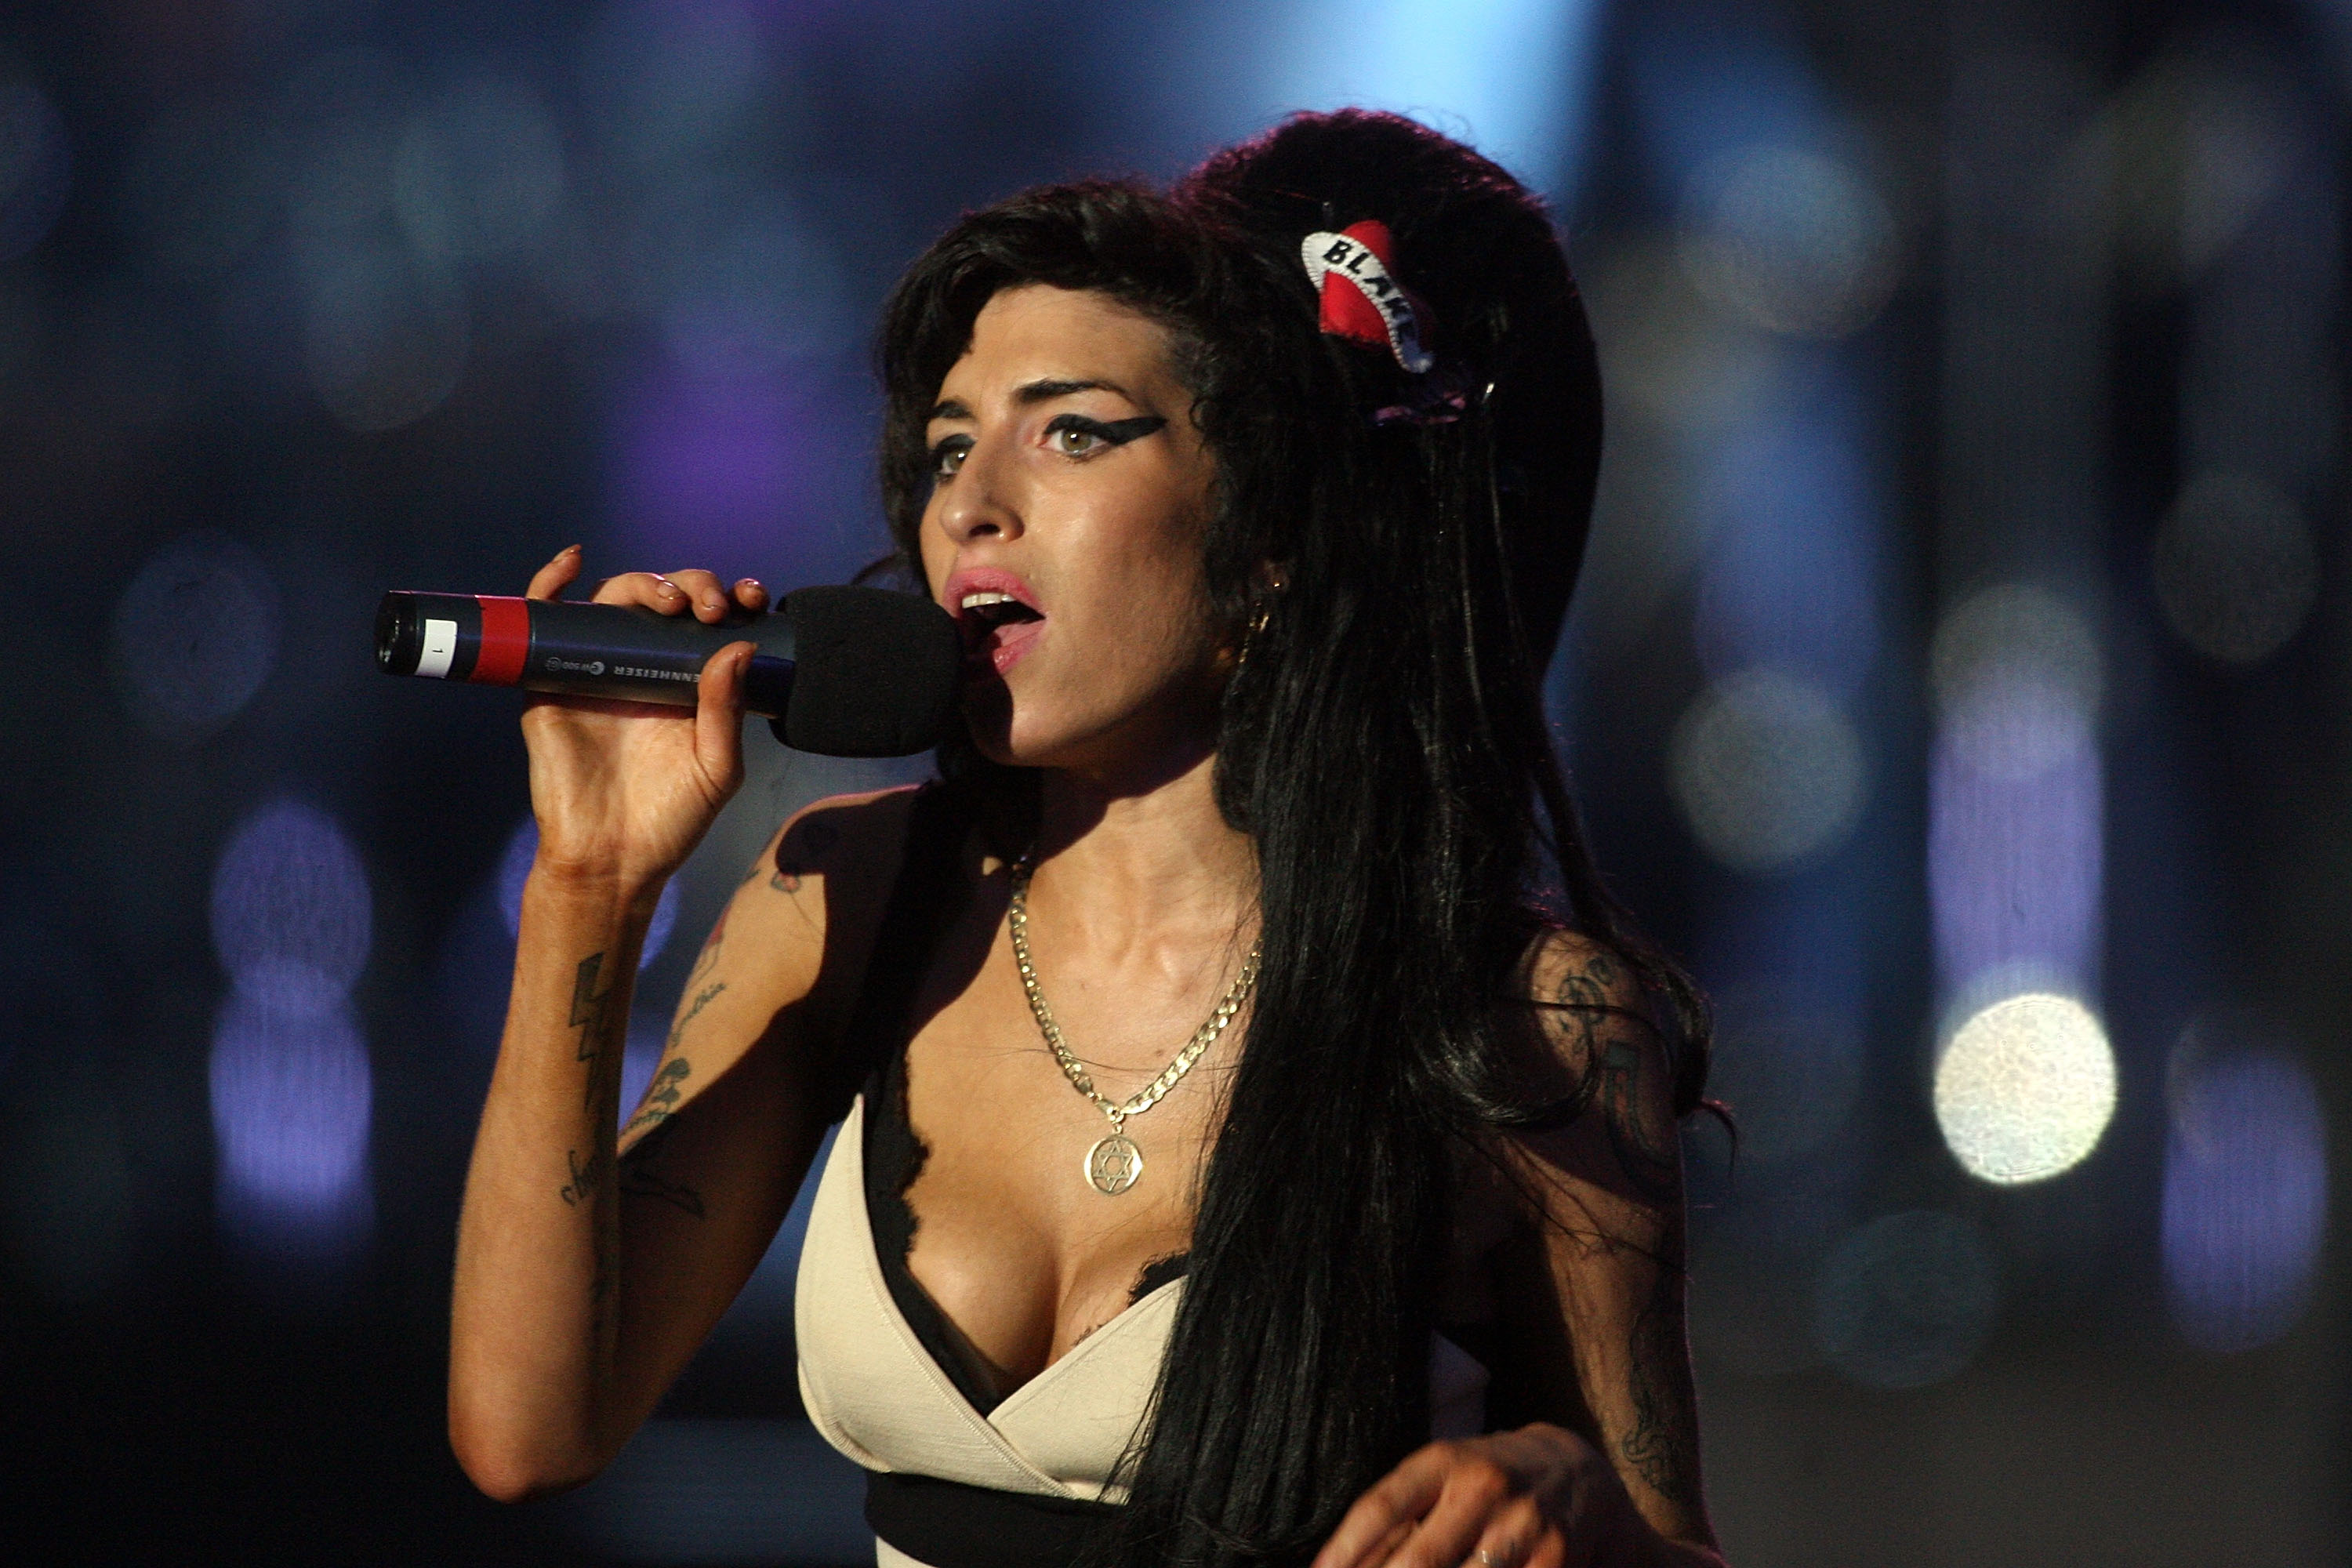 46664 Concert: In Celebration Of Nelson Mandela's Life - Performance, Amy Winehouse's 7 Best Songs